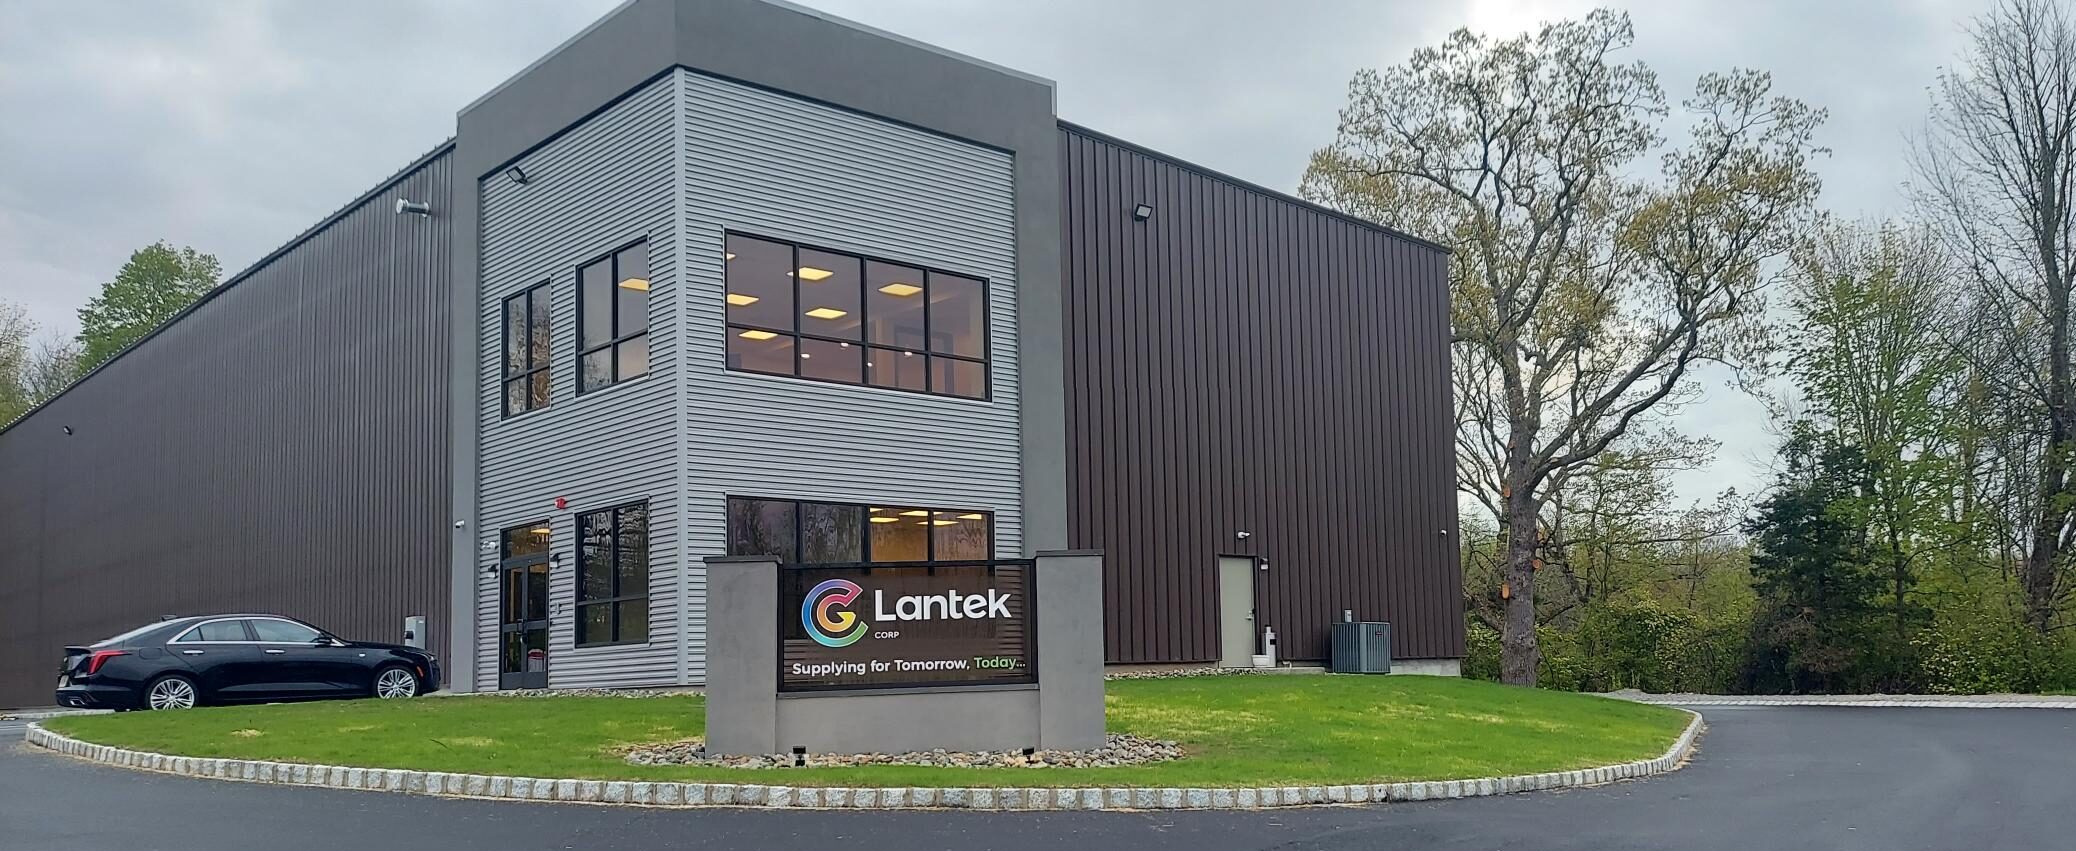 Lantek Corporation headquarters